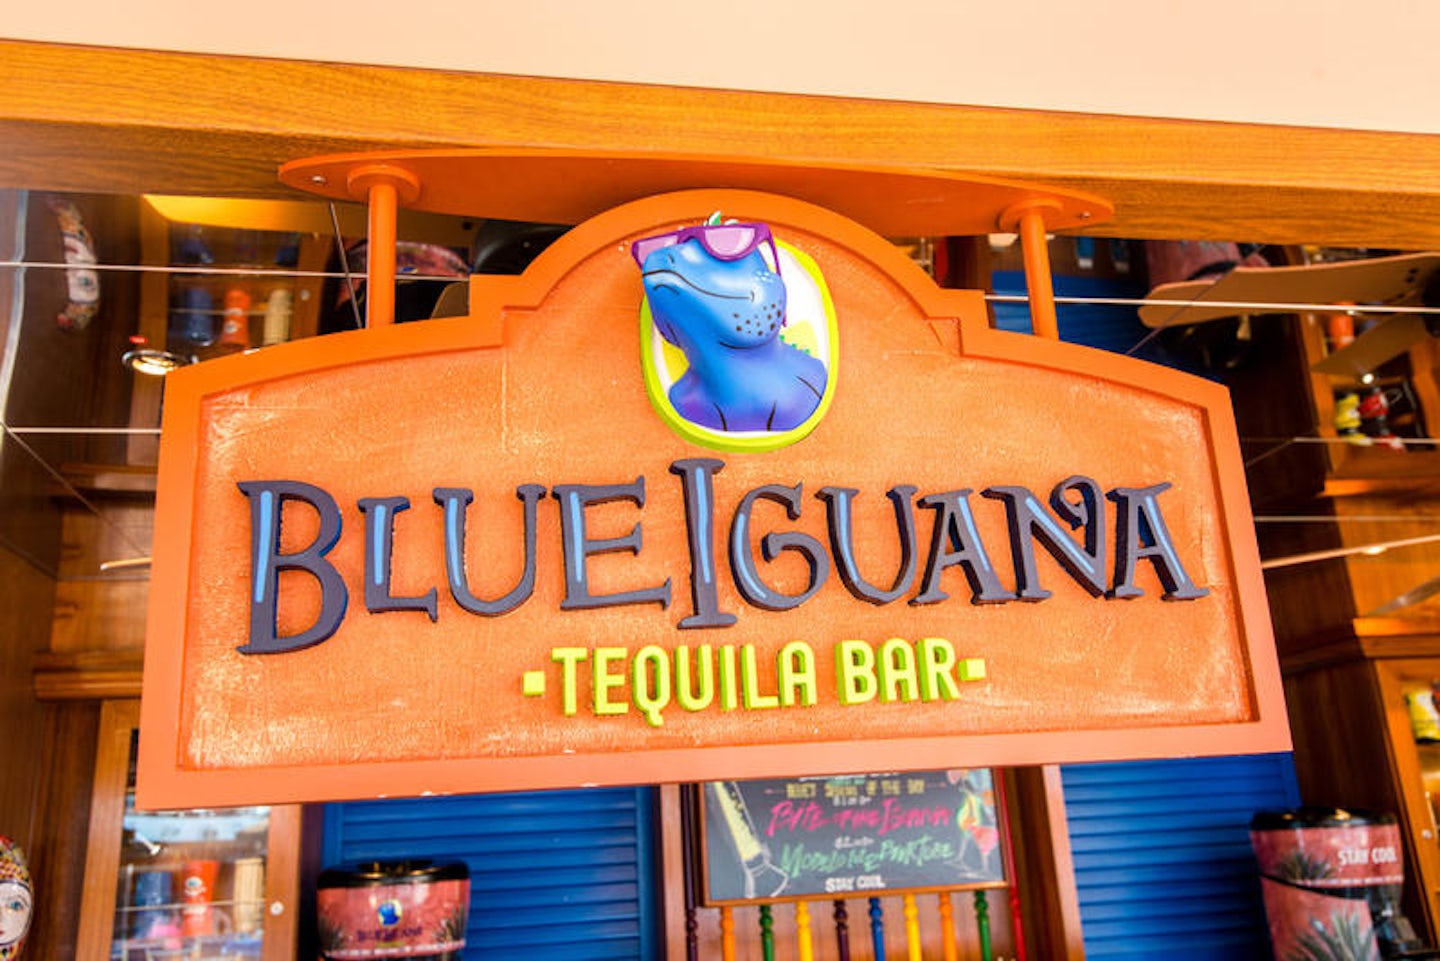 BlueIguana Tequila Bar on Carnival Vista